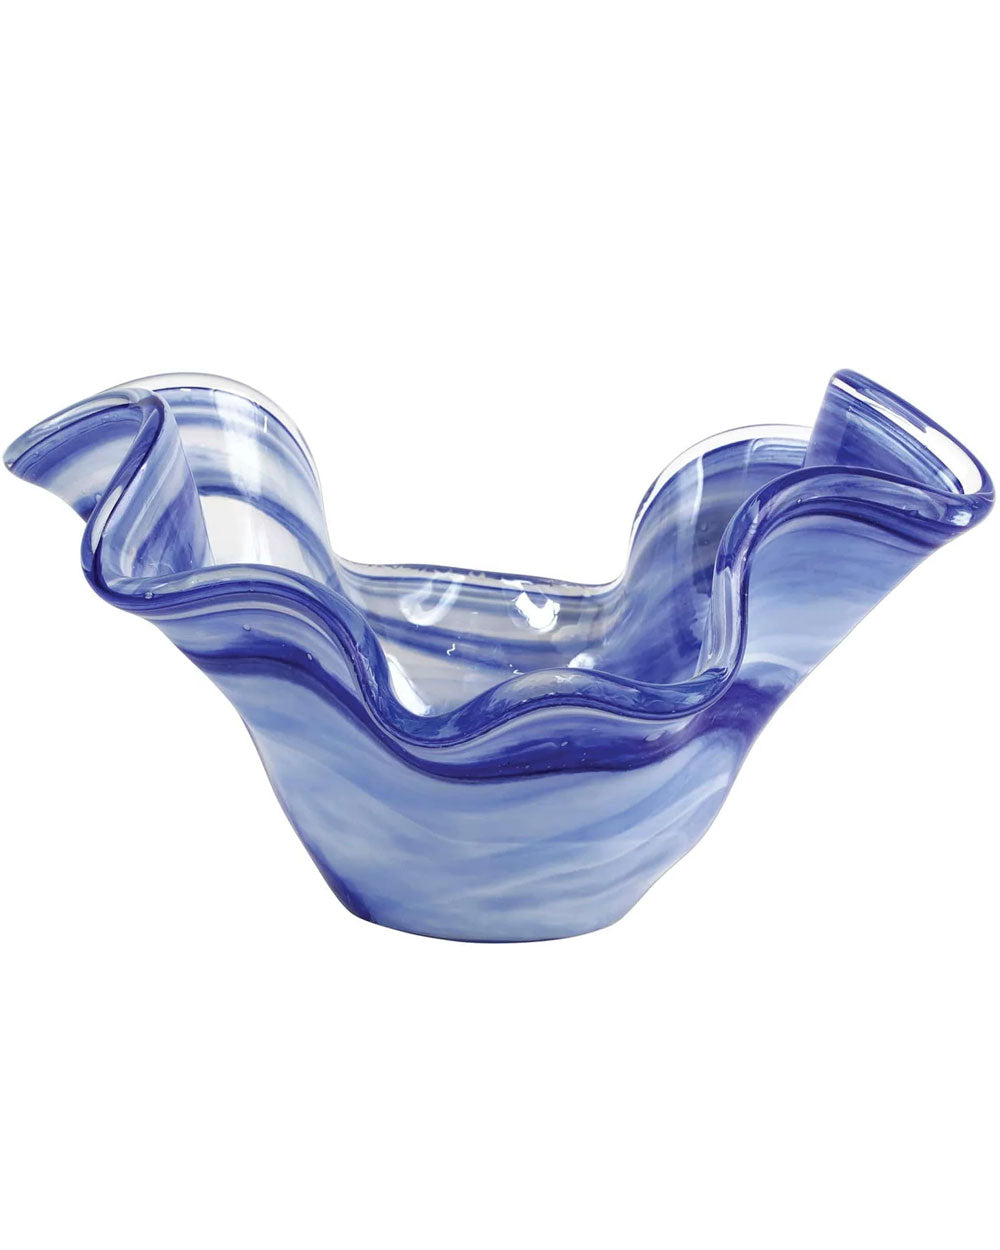 Onda Medium Glass Bowl in Cobalt